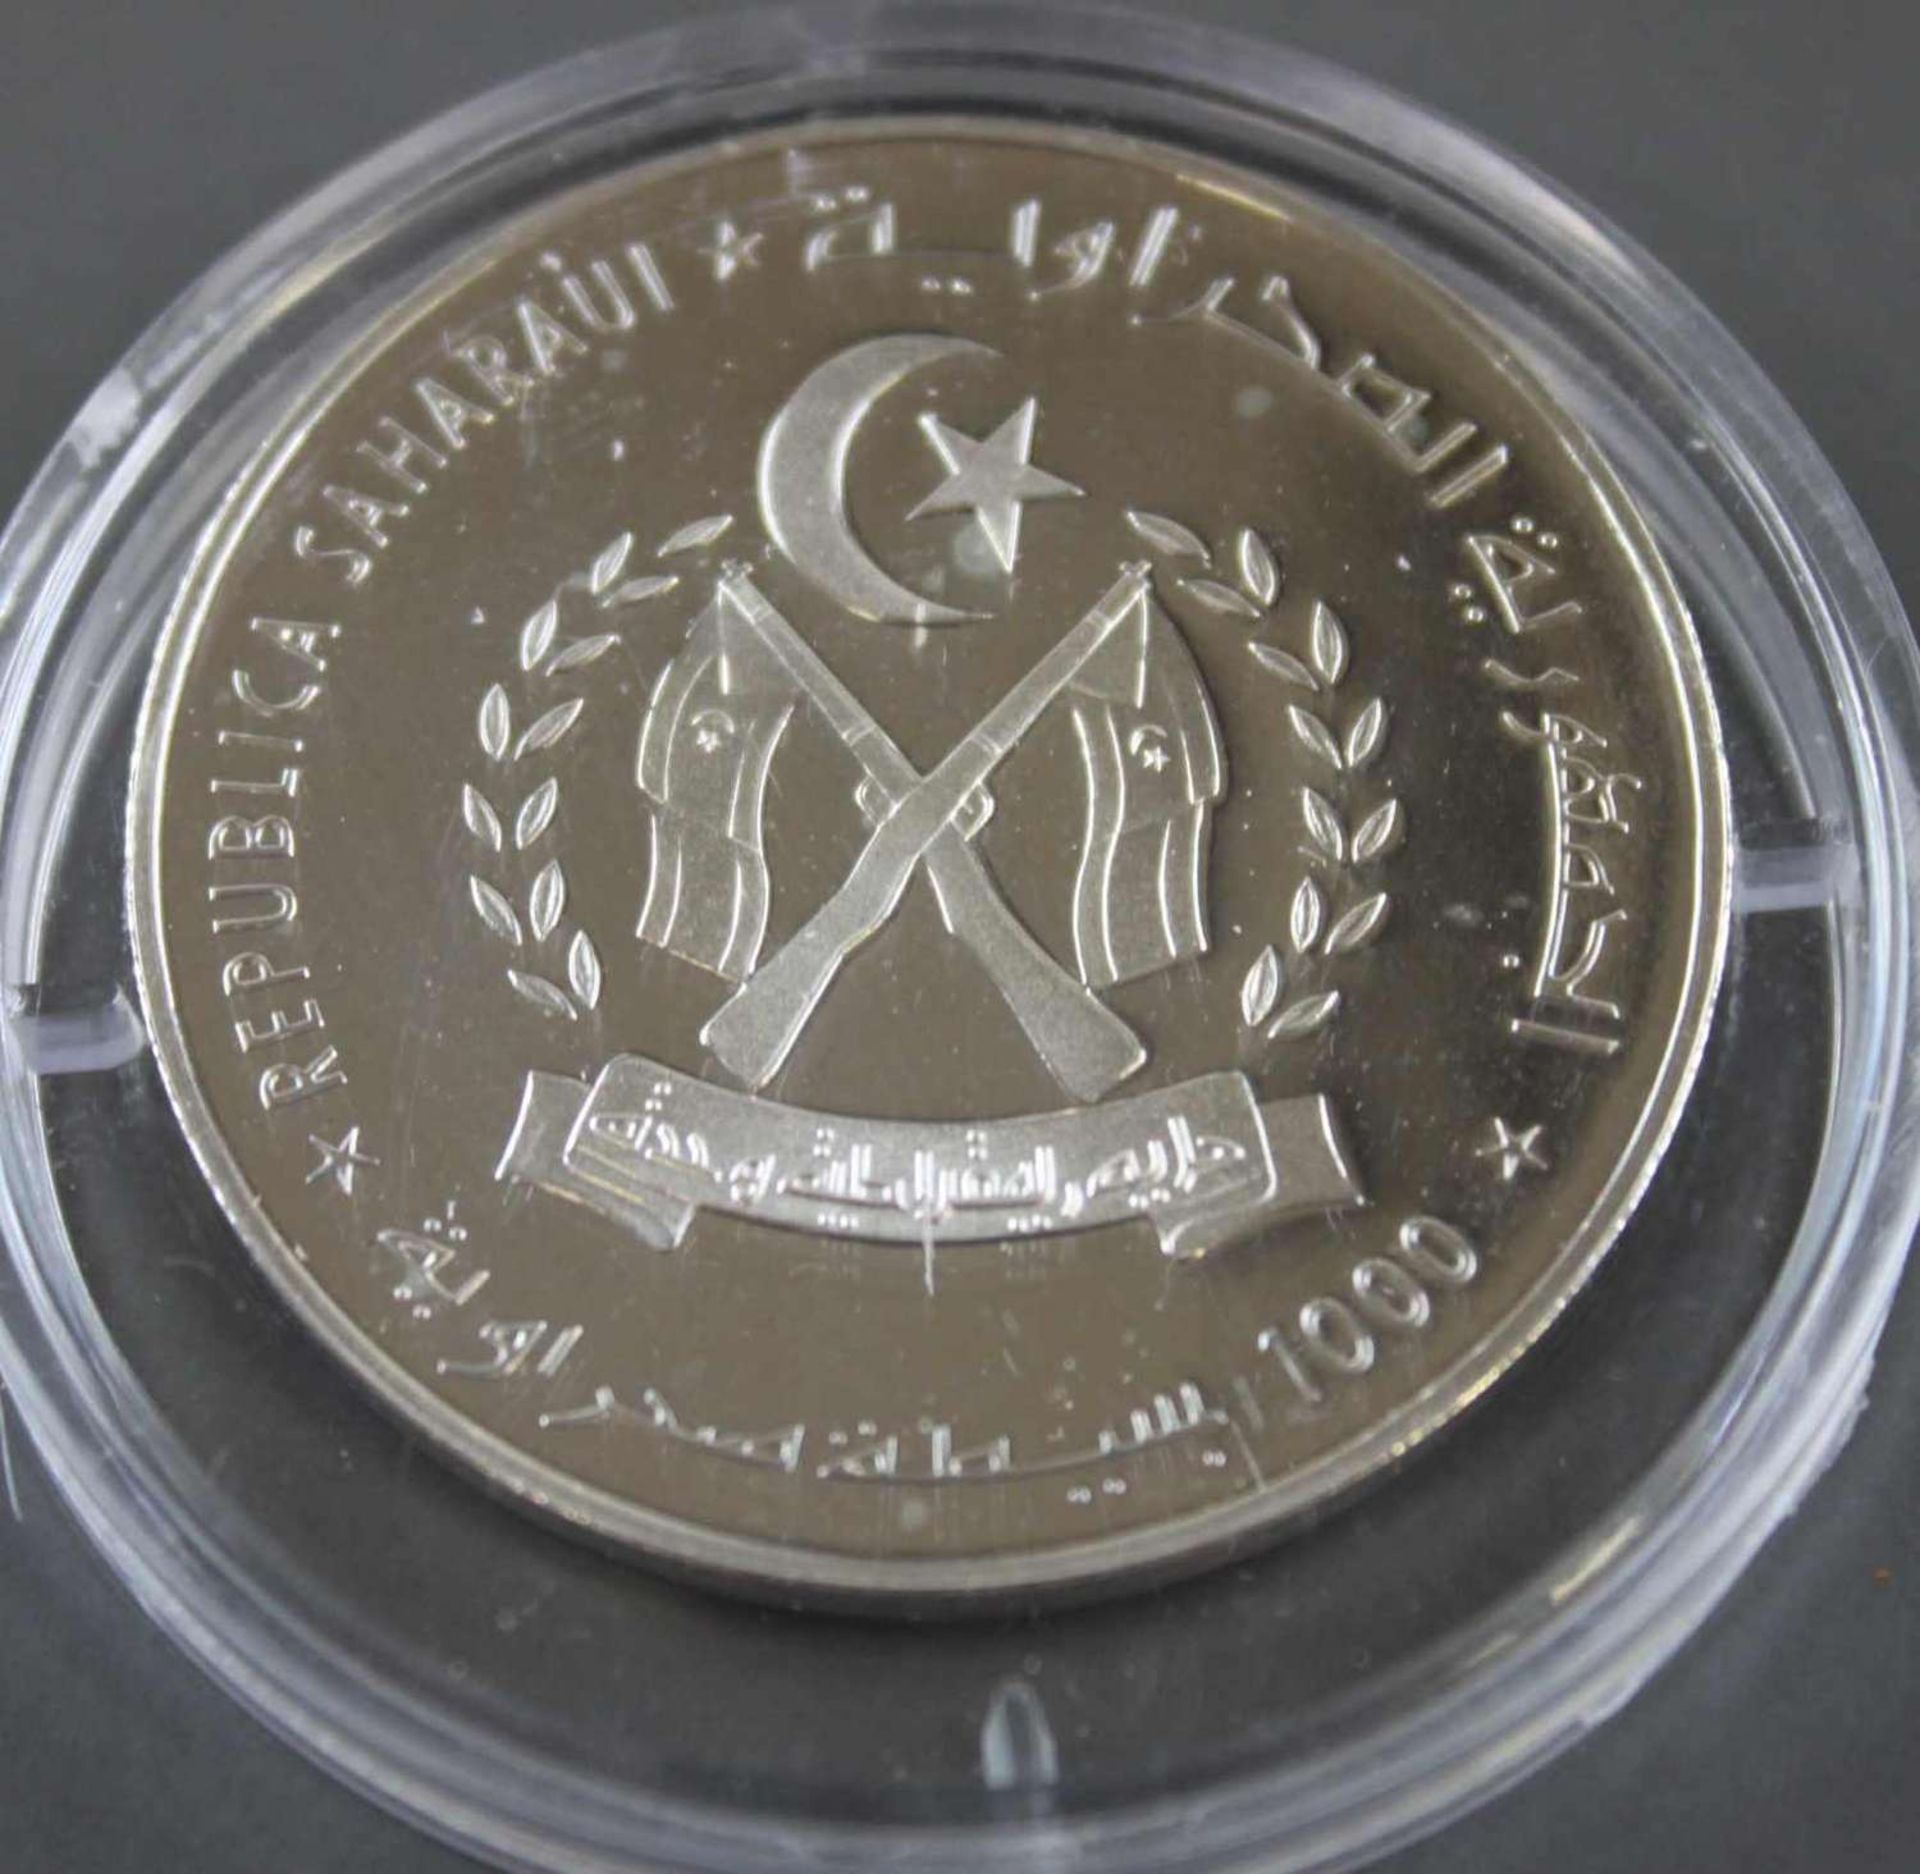 Republik Sahara 1998, 1000 Pesetas - Silbermünze "Wikinger - Schiff". Silber 999, Gewicht: 15 g, - Image 2 of 2